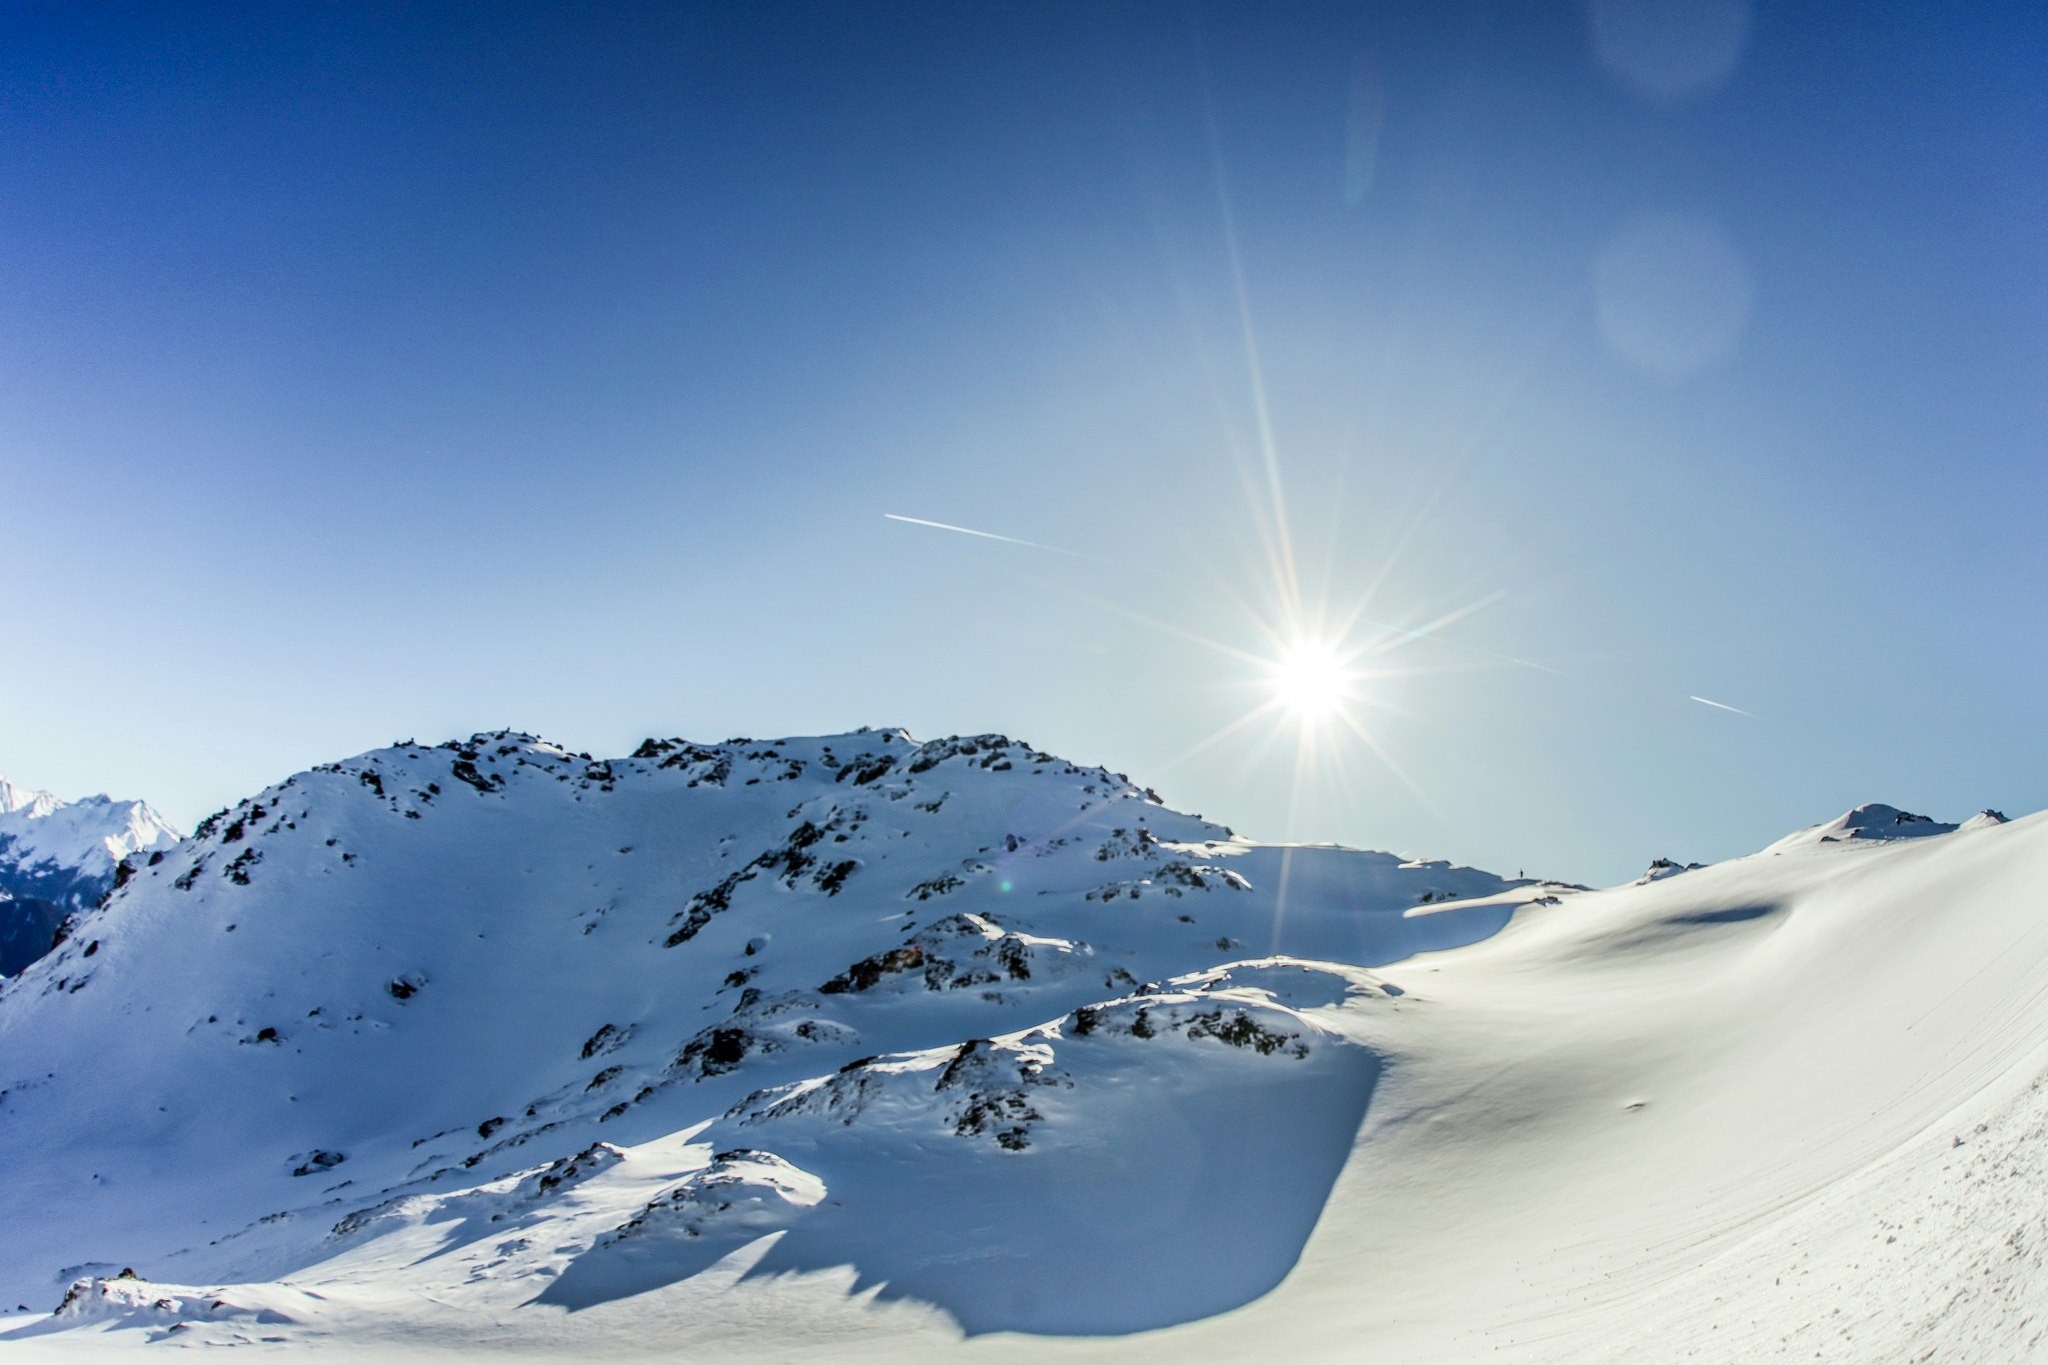 Freeride beginner guiding: your start into powder snow paradise